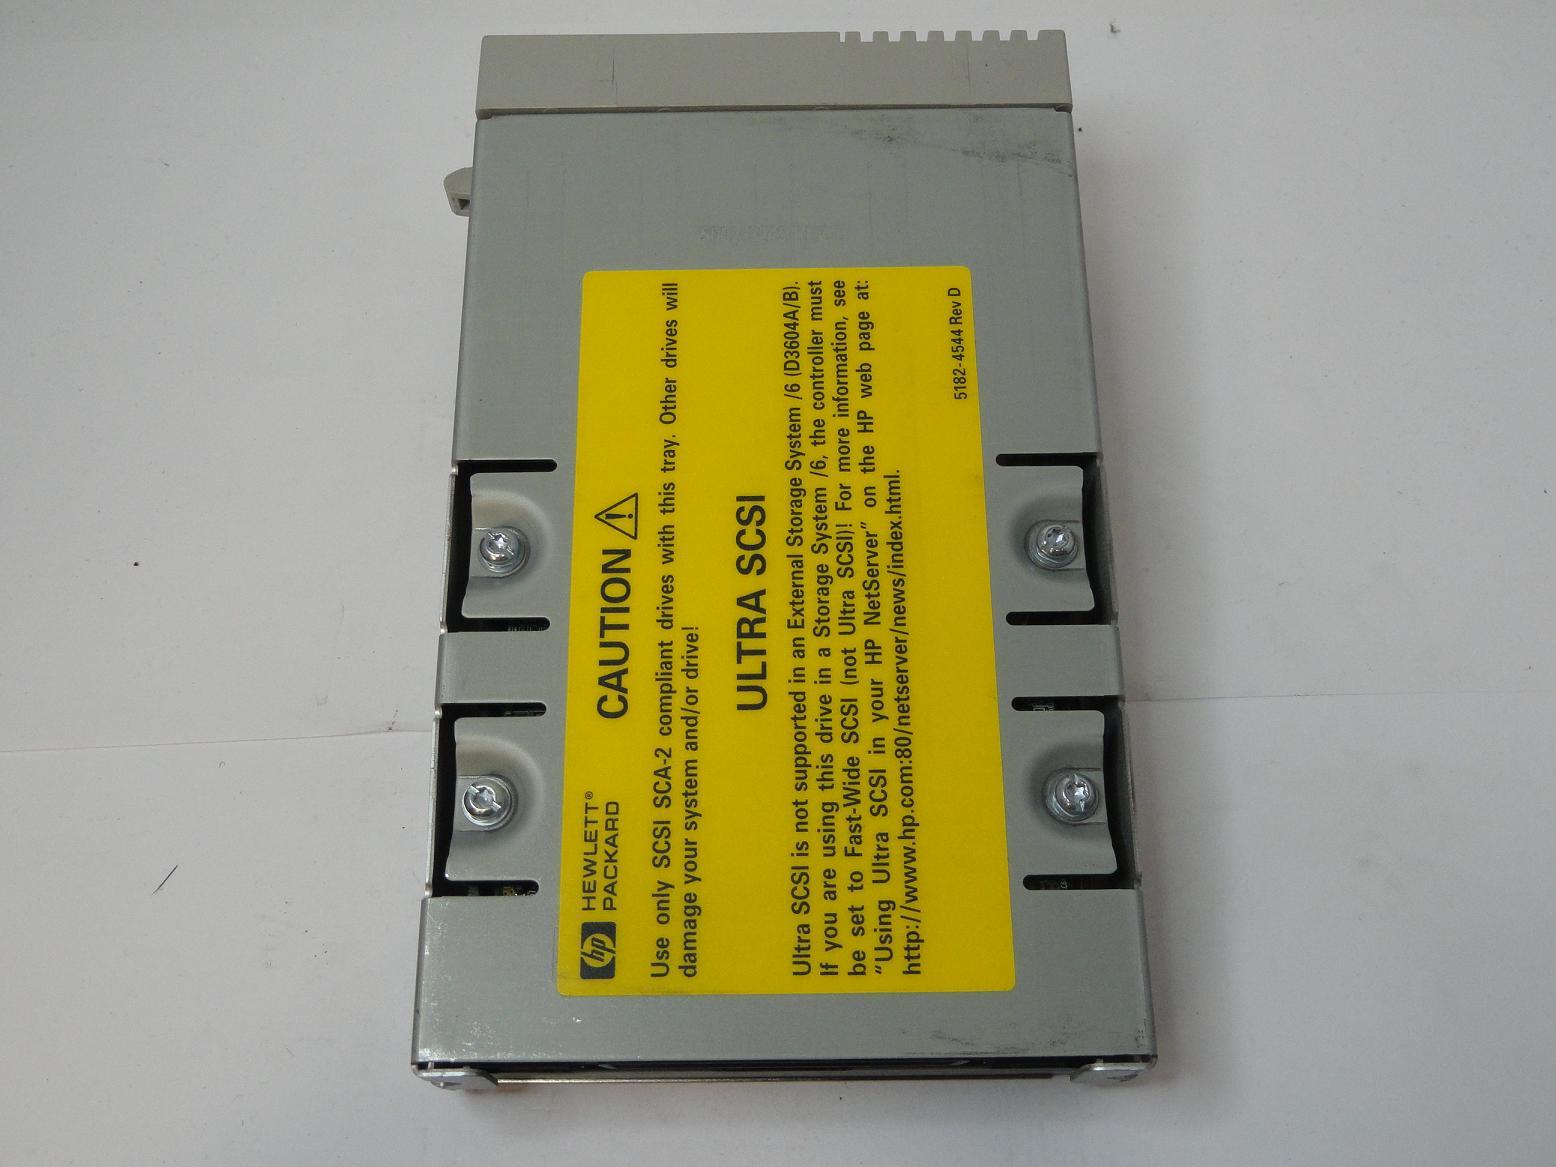 MC6507_03L5510_IBM HP 4.2GB SCSI 80 Pin 7200rpm 3.5in HDD - Image2